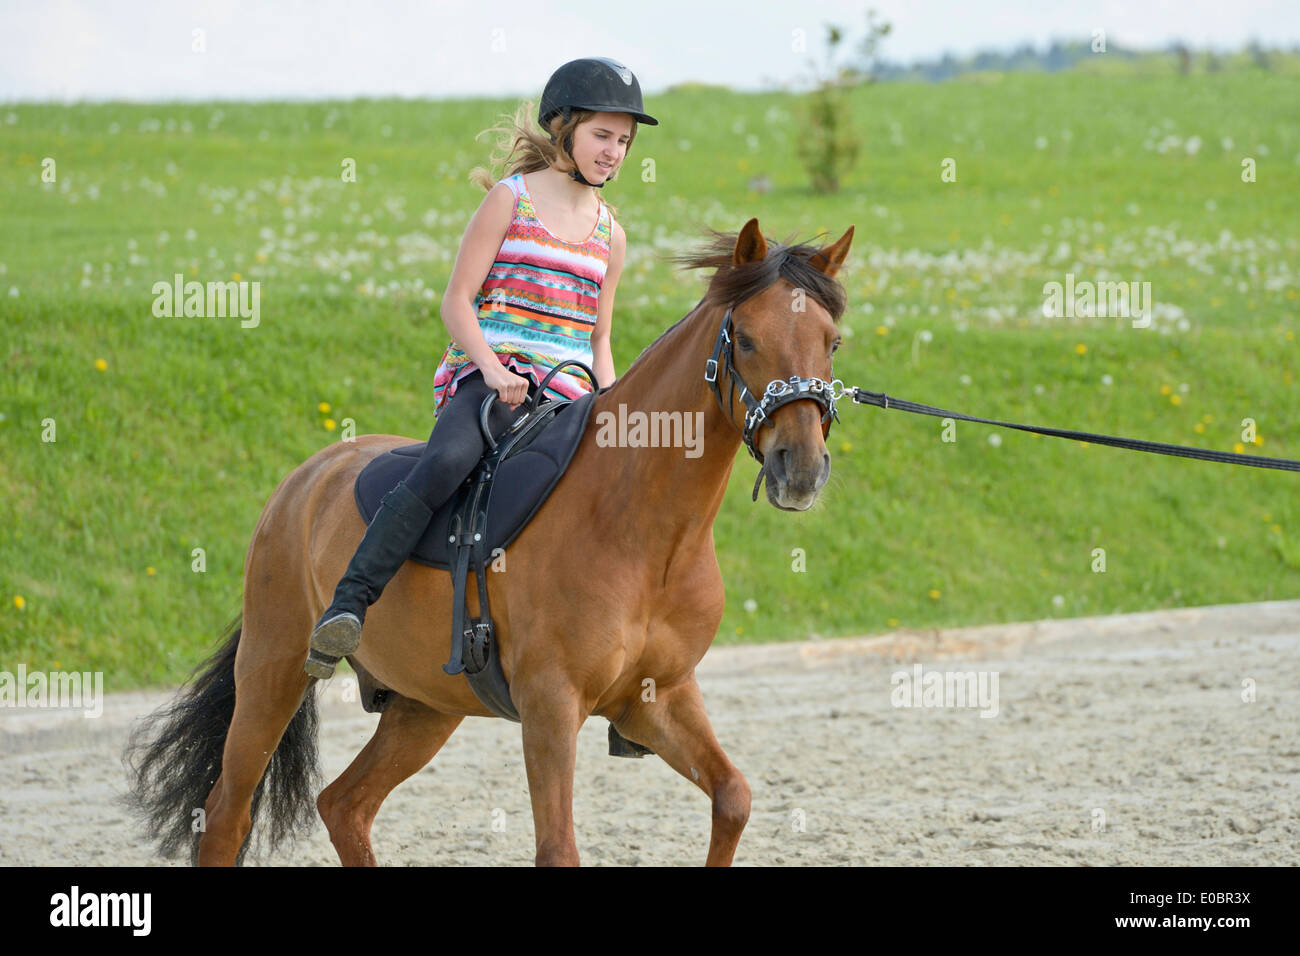 Lunge lesson, girl on Paso Fino horse Stock Photo